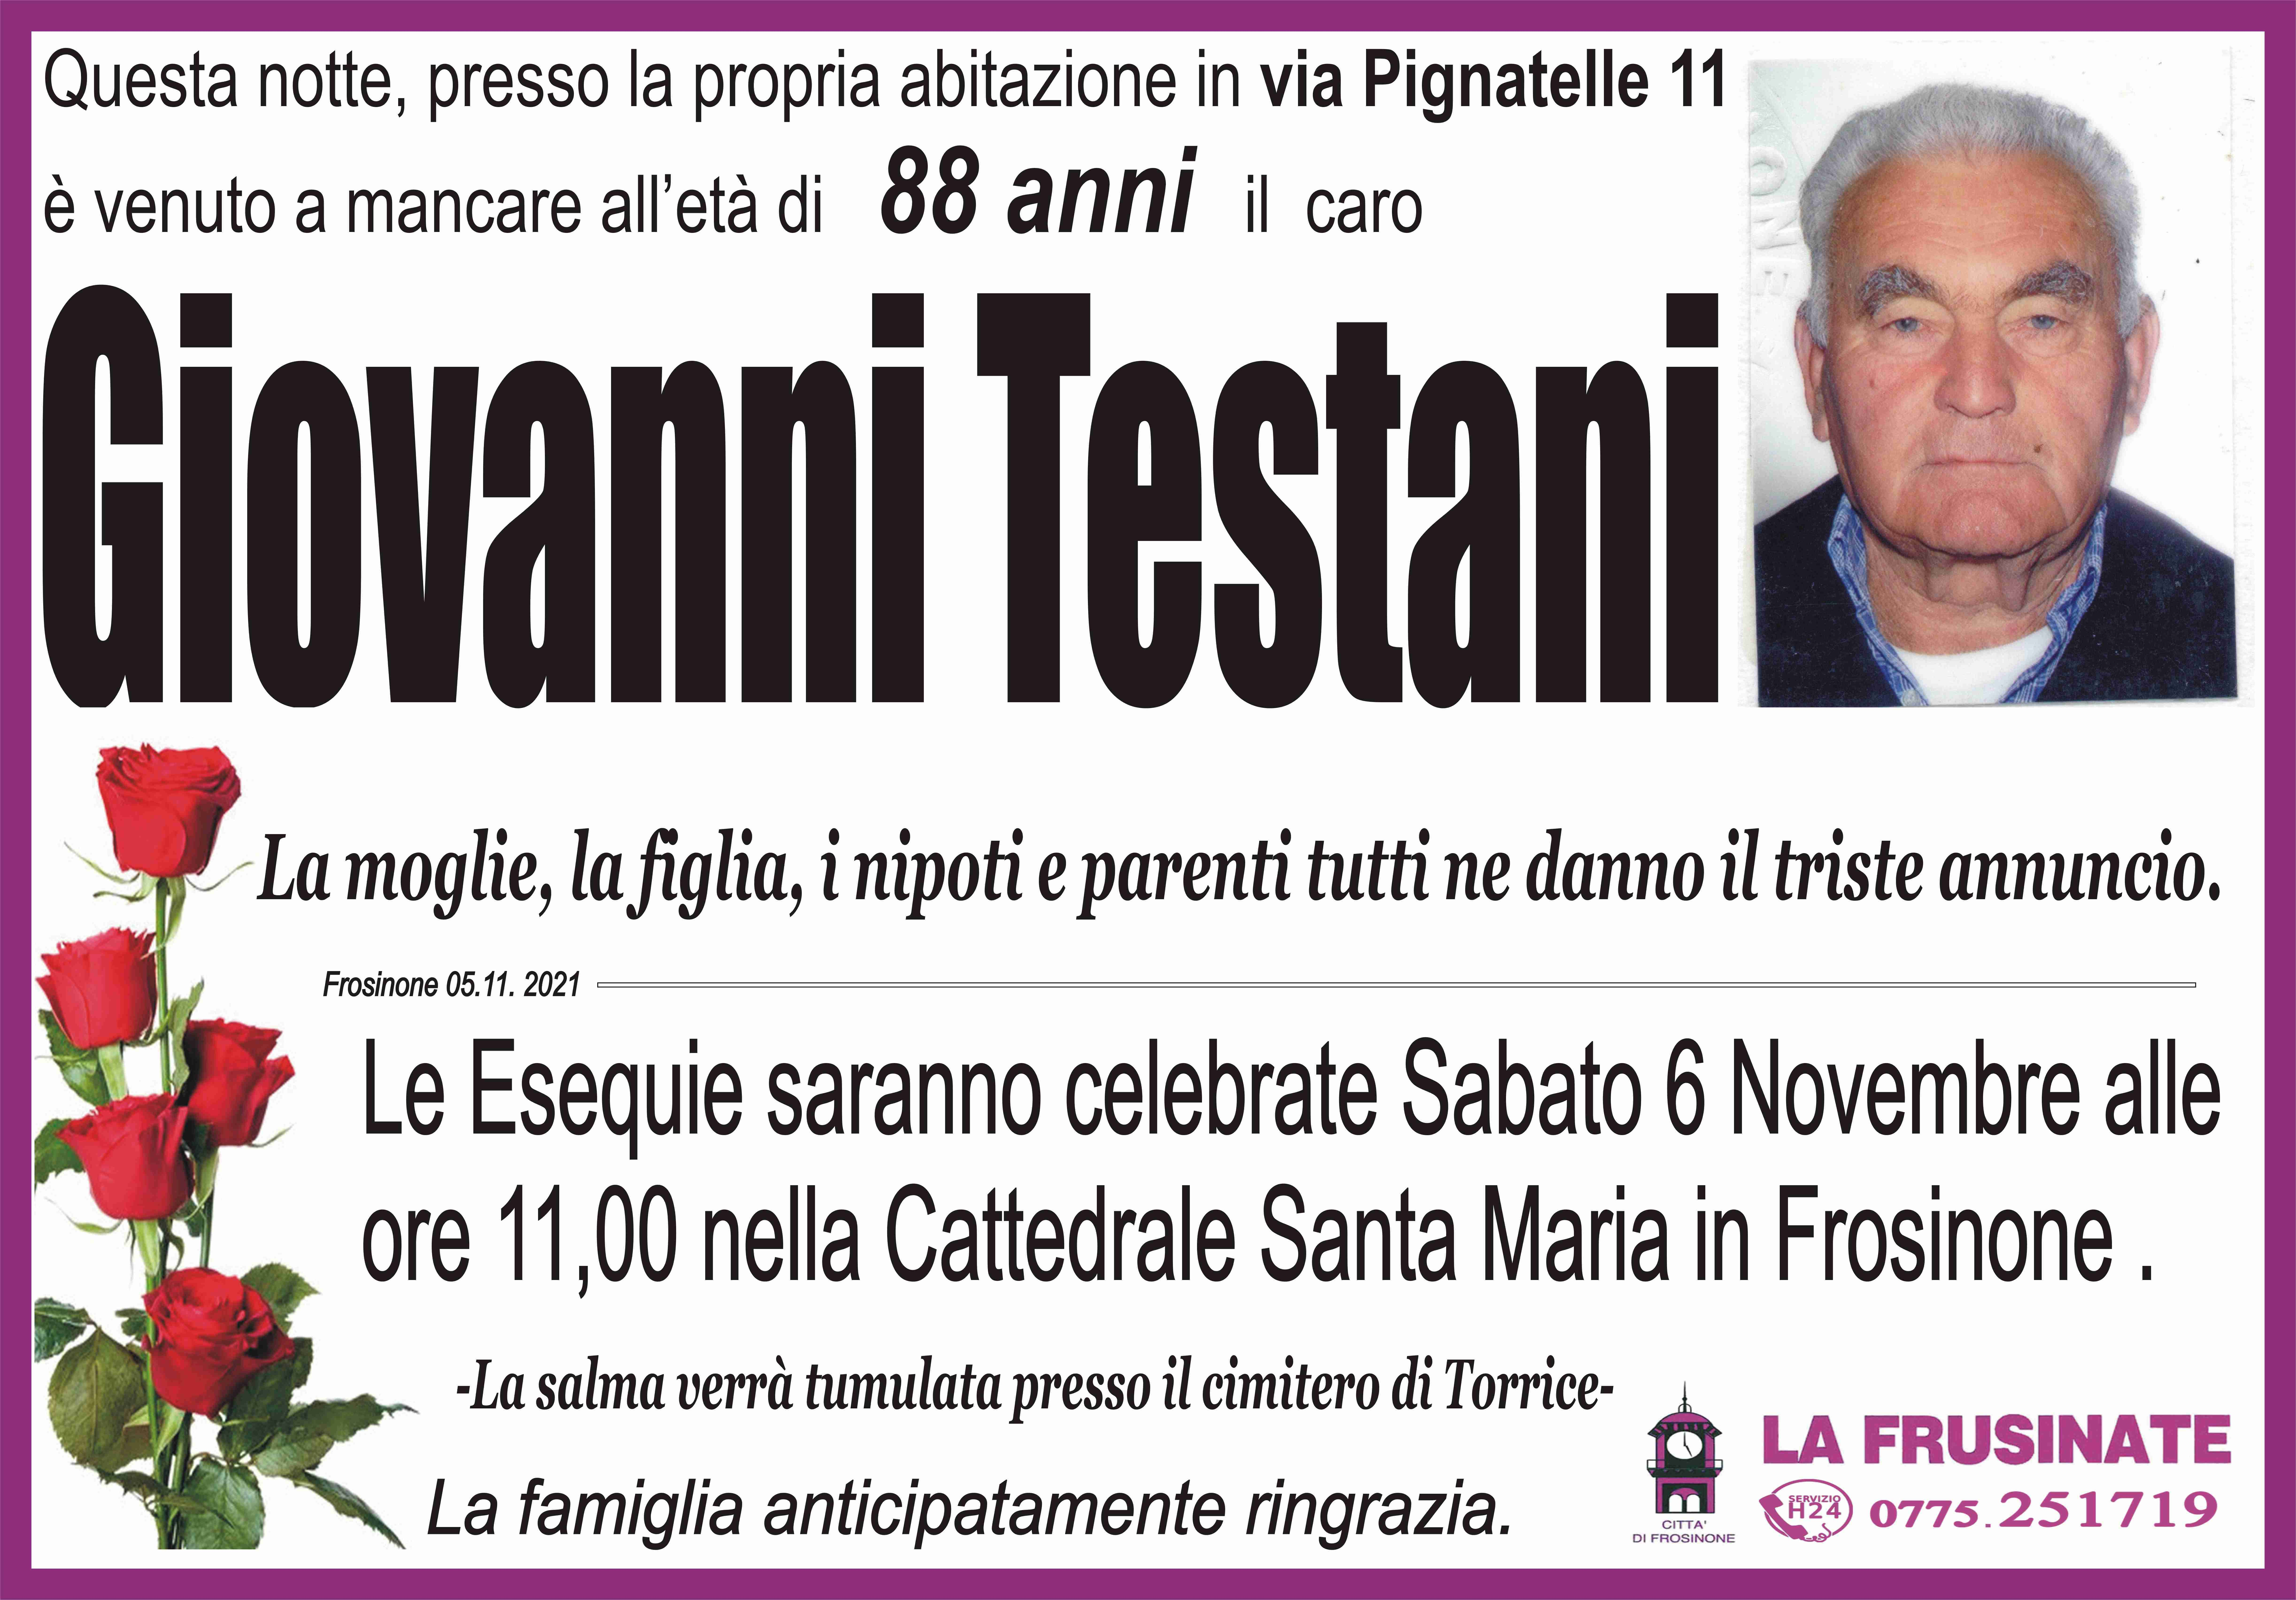 Giovanni Testani